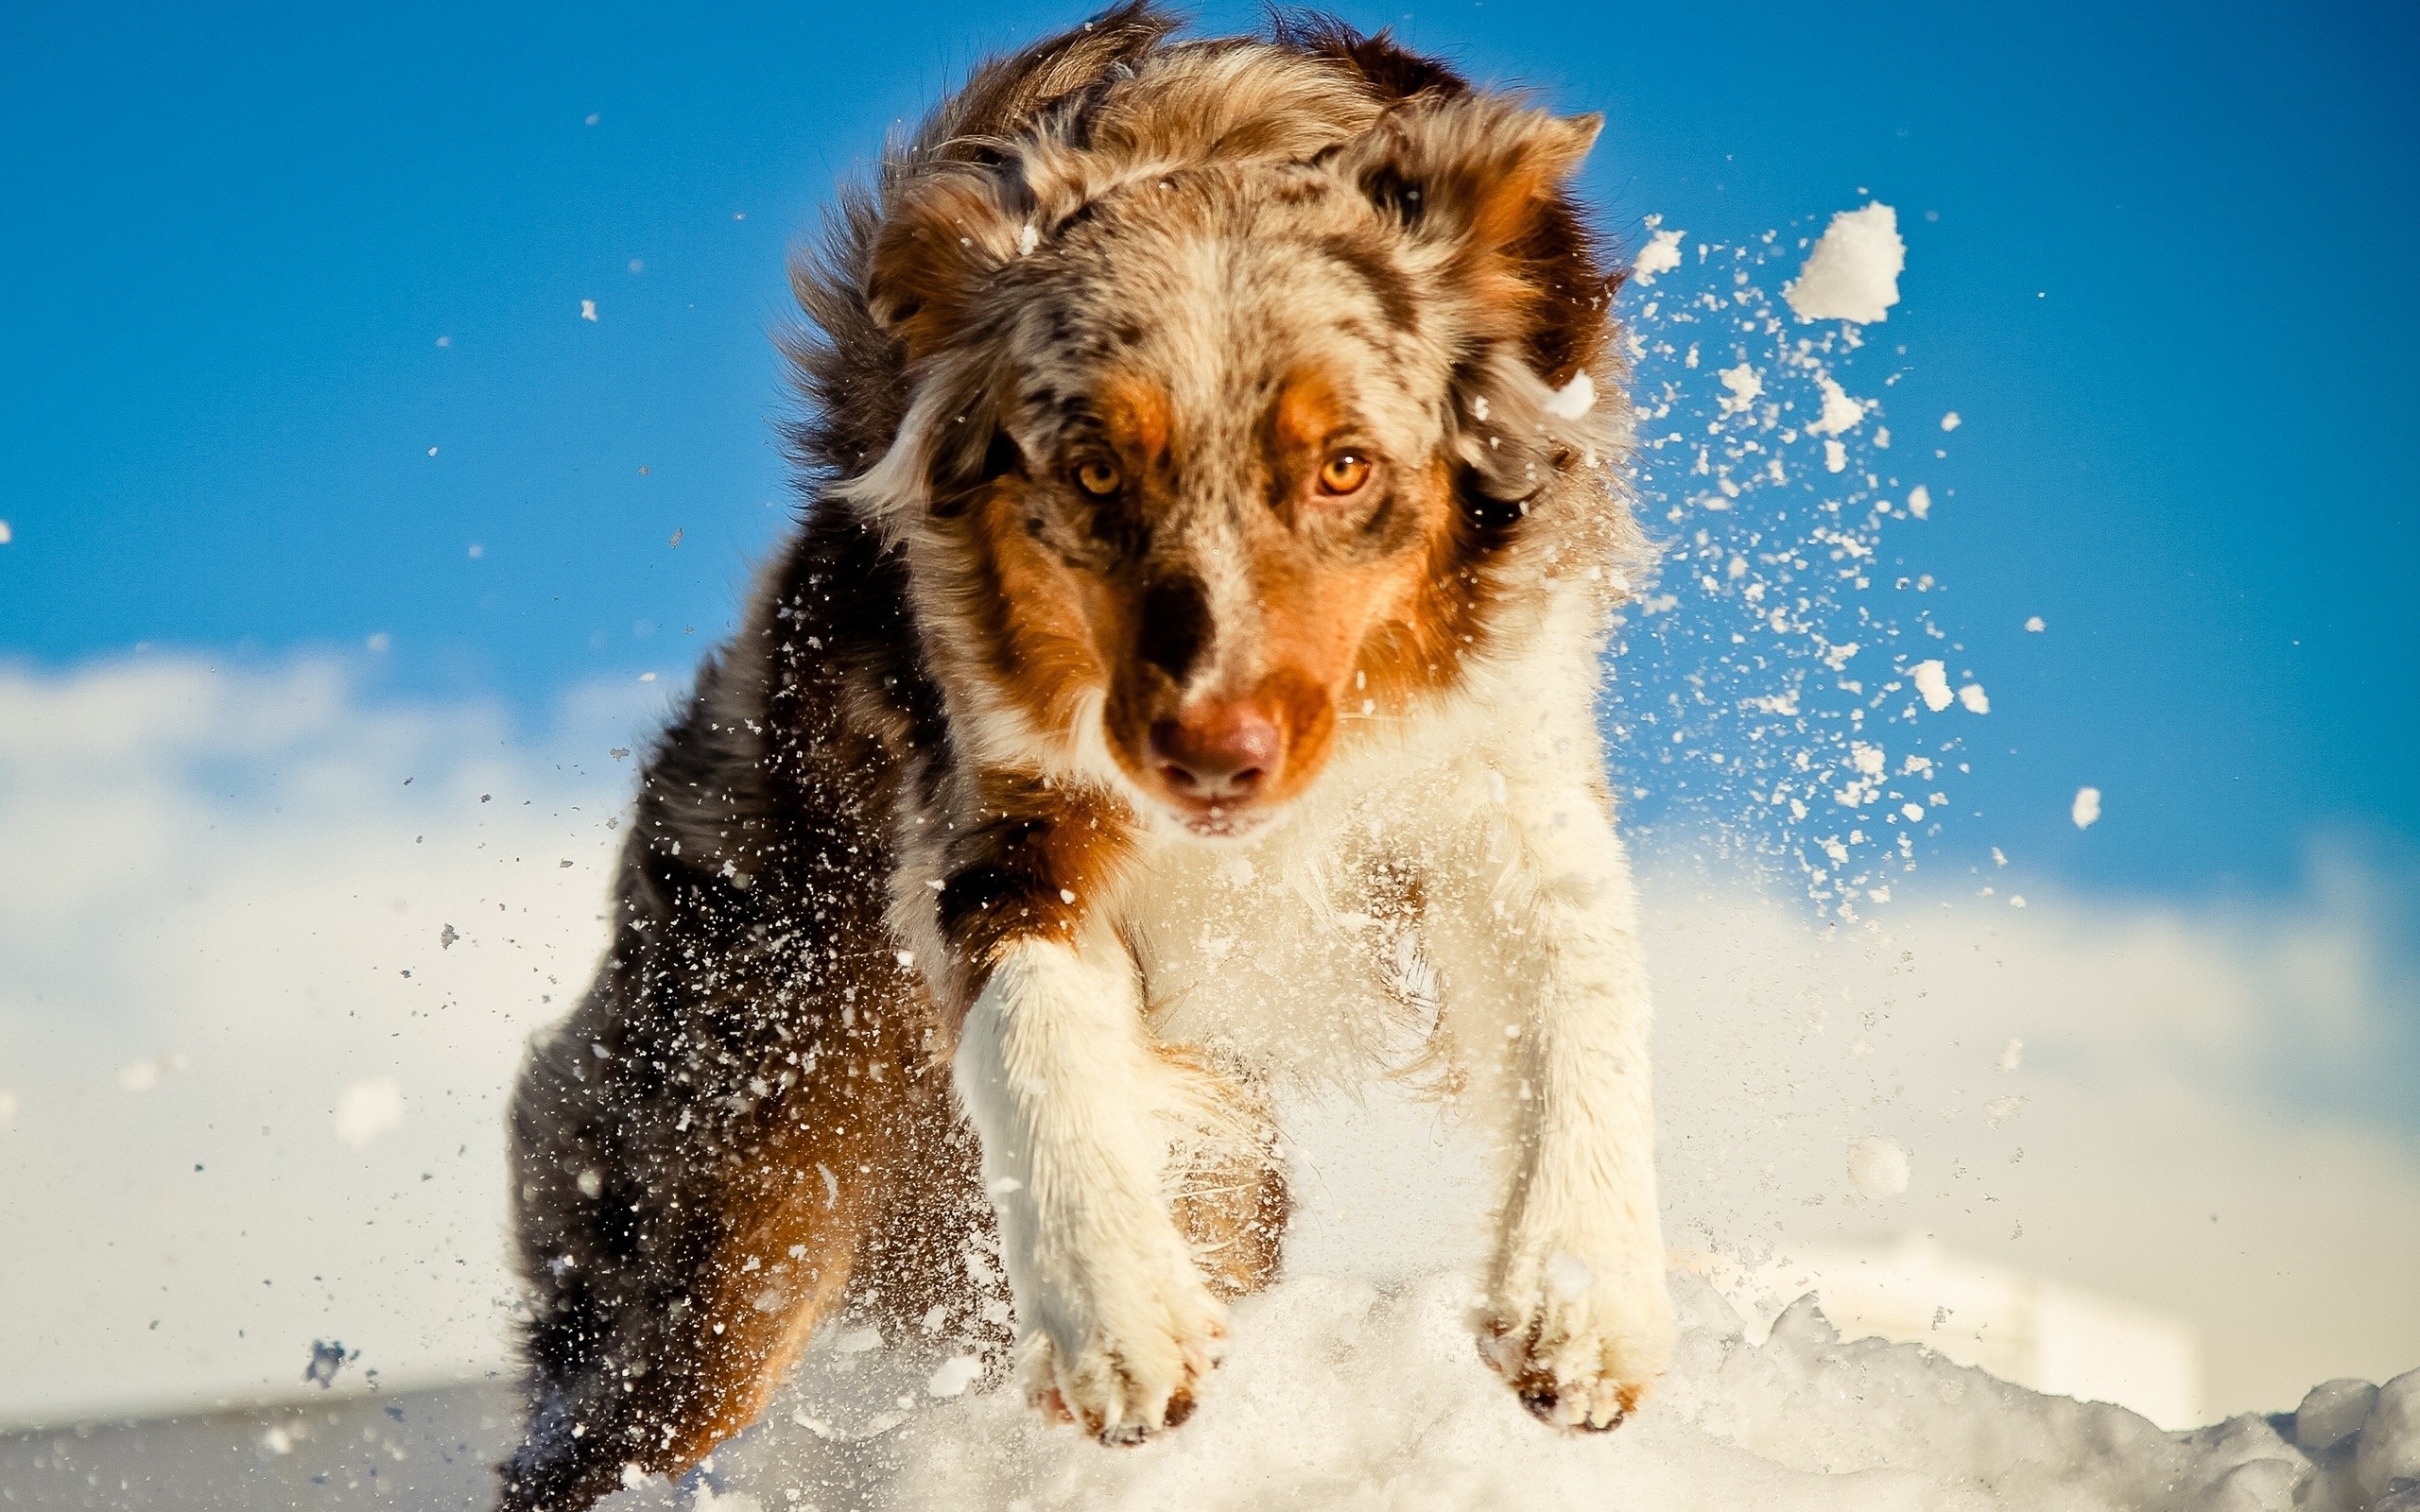 General 2560x1600 dog snow animals outdoors winter mammals closeup